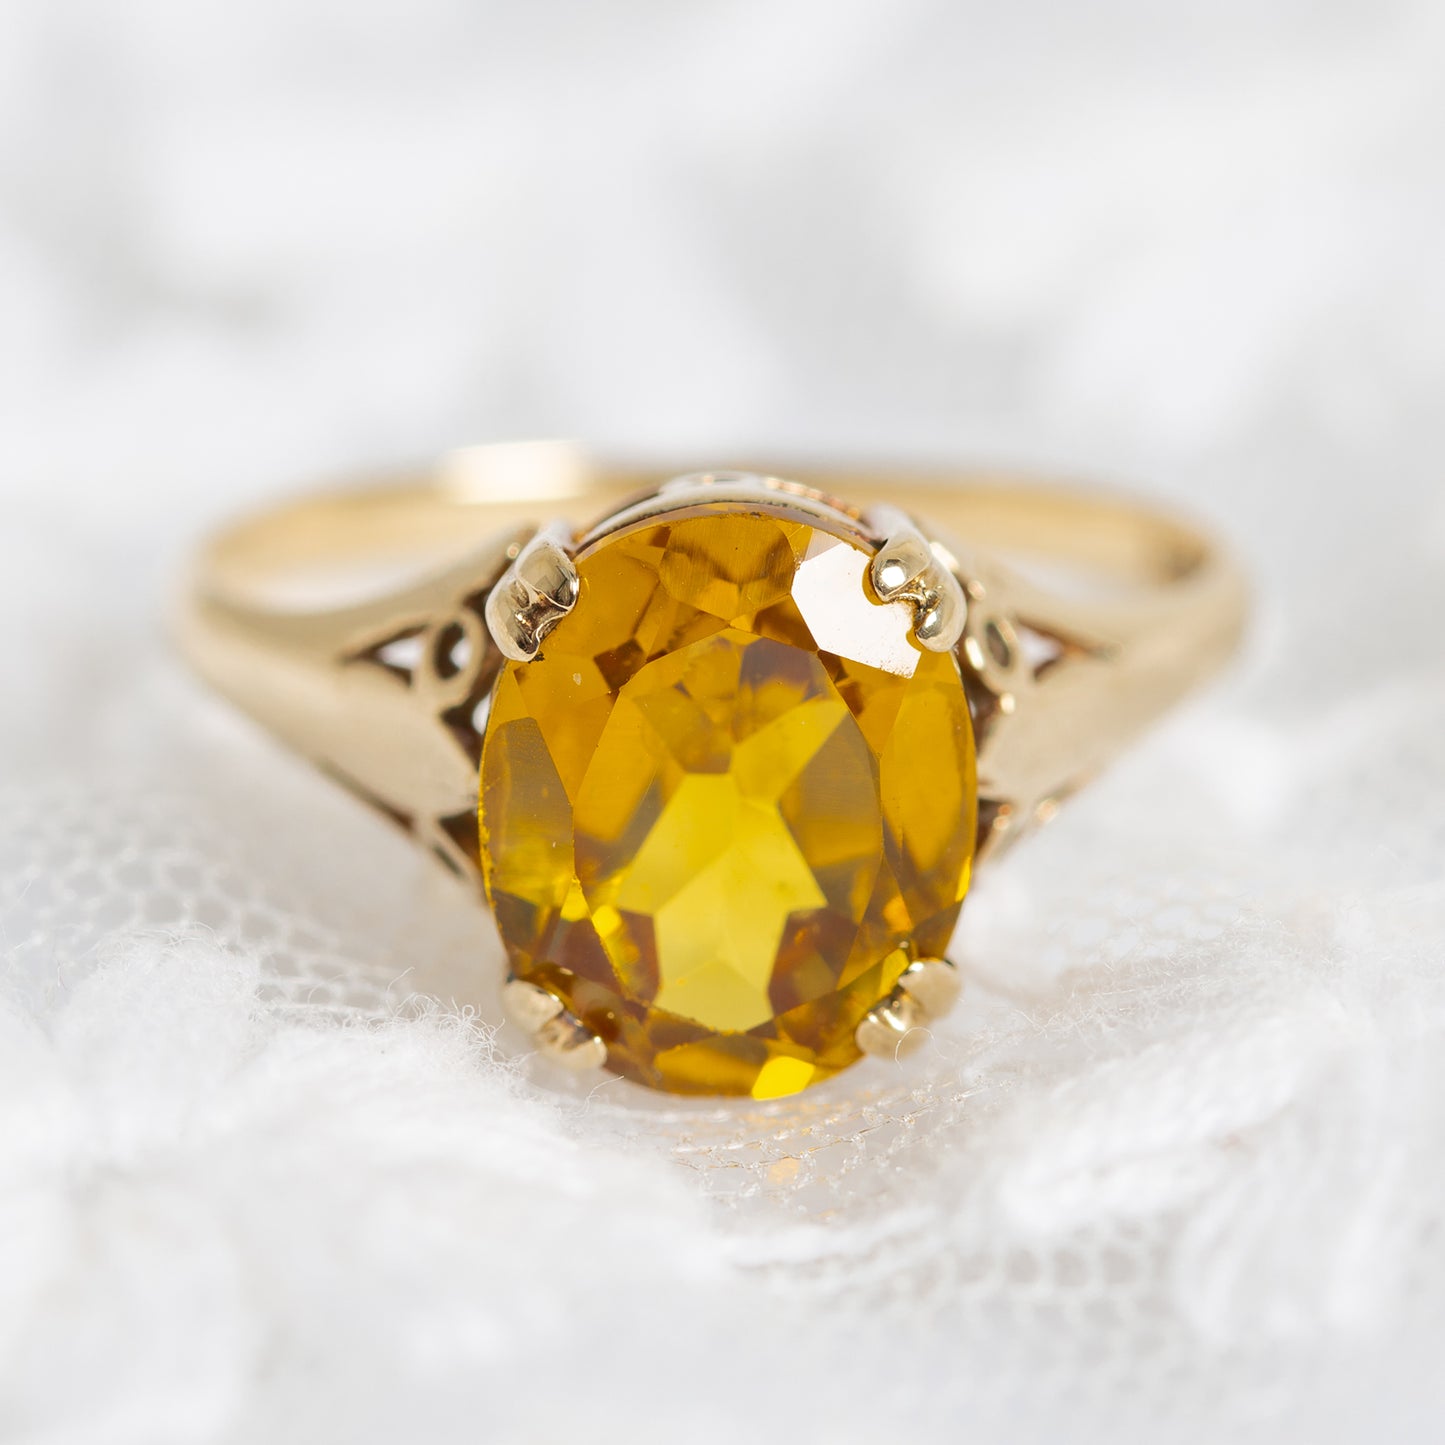 Vintage 9ct Gold Orange Sapphire Solitaire Ring UK Size L1/2 B'ham Hallmark (A1291)